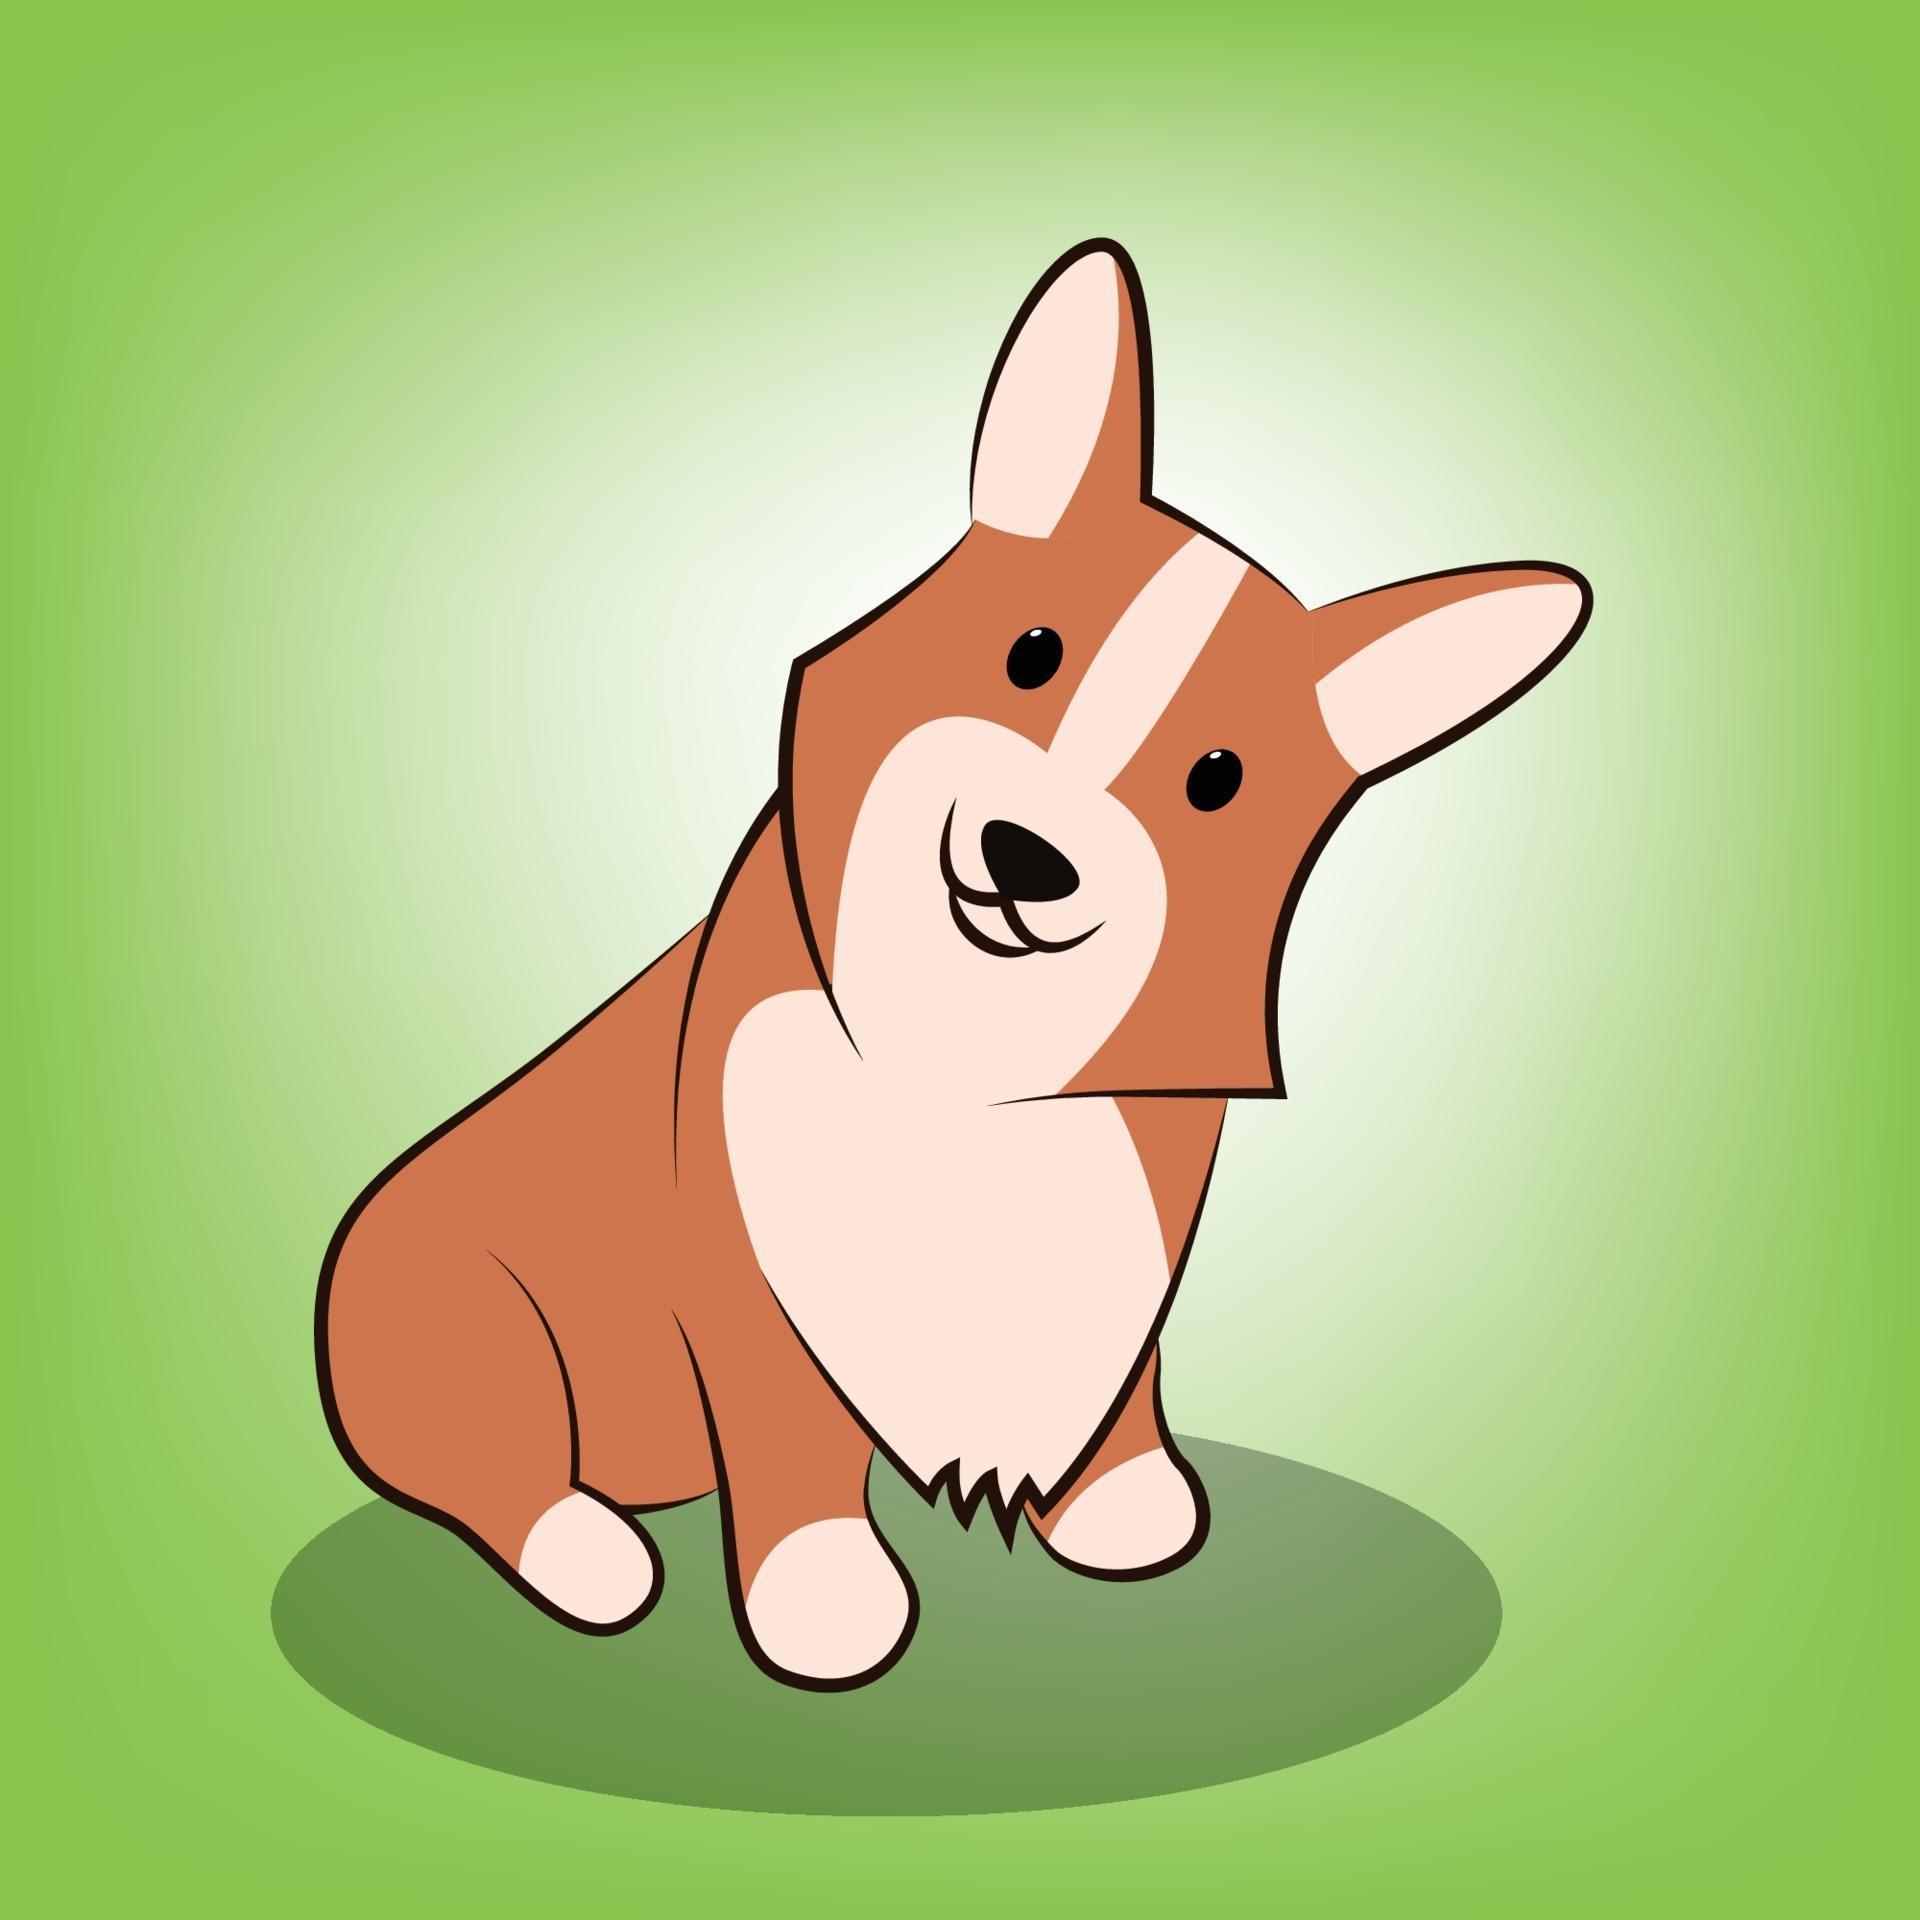 Cute Cartoon Vector Illustration of a corgi dog